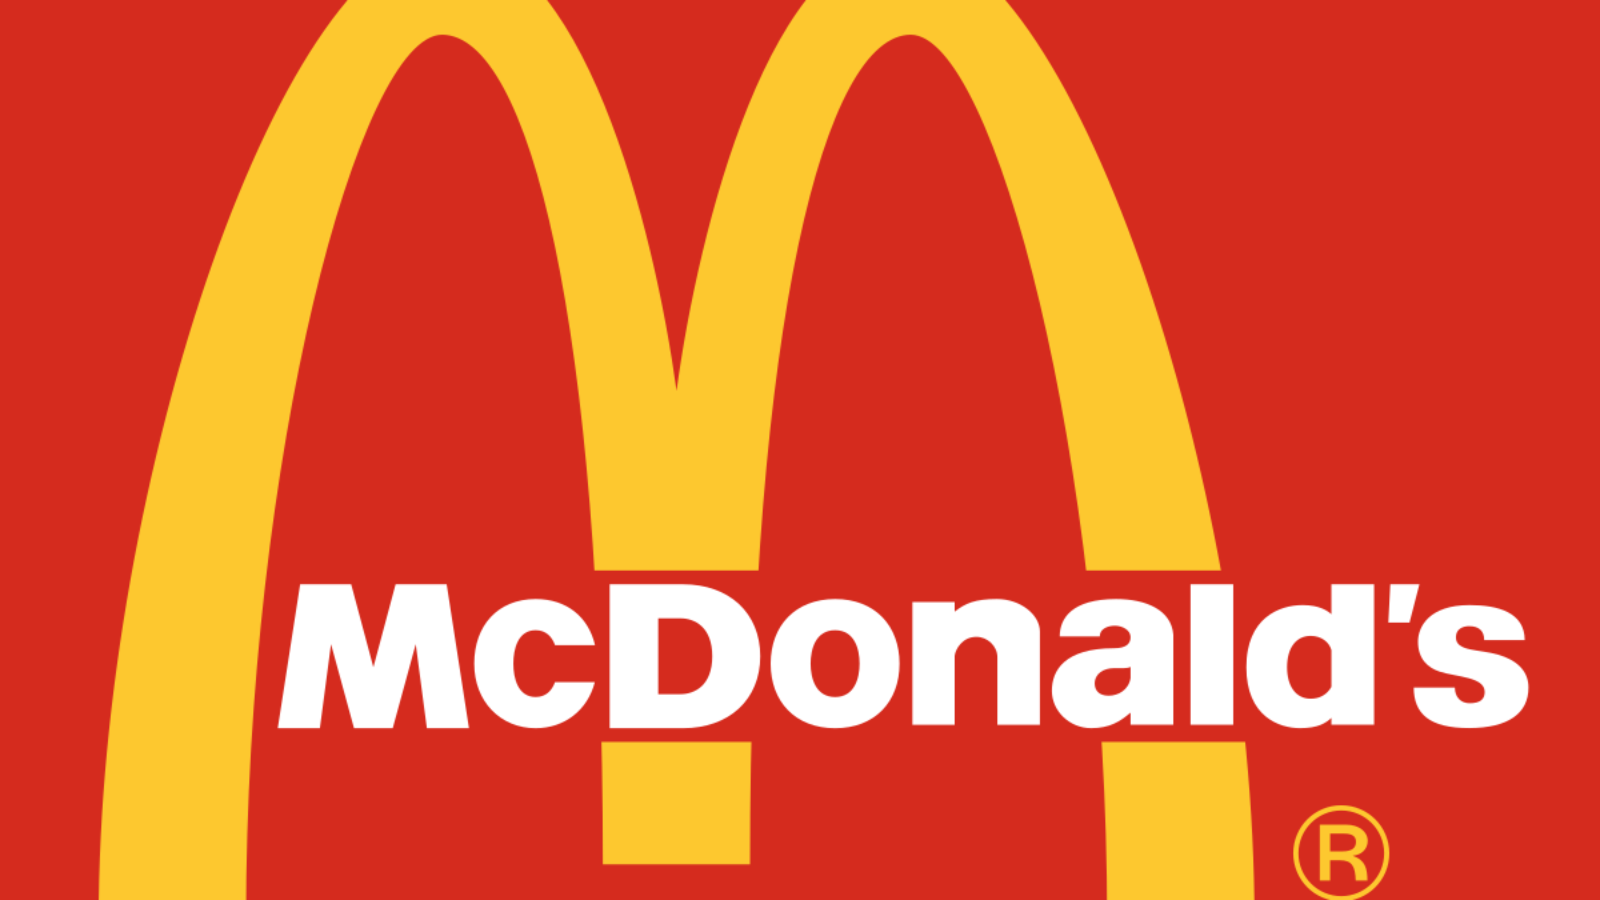 McDonald's_logo.svg